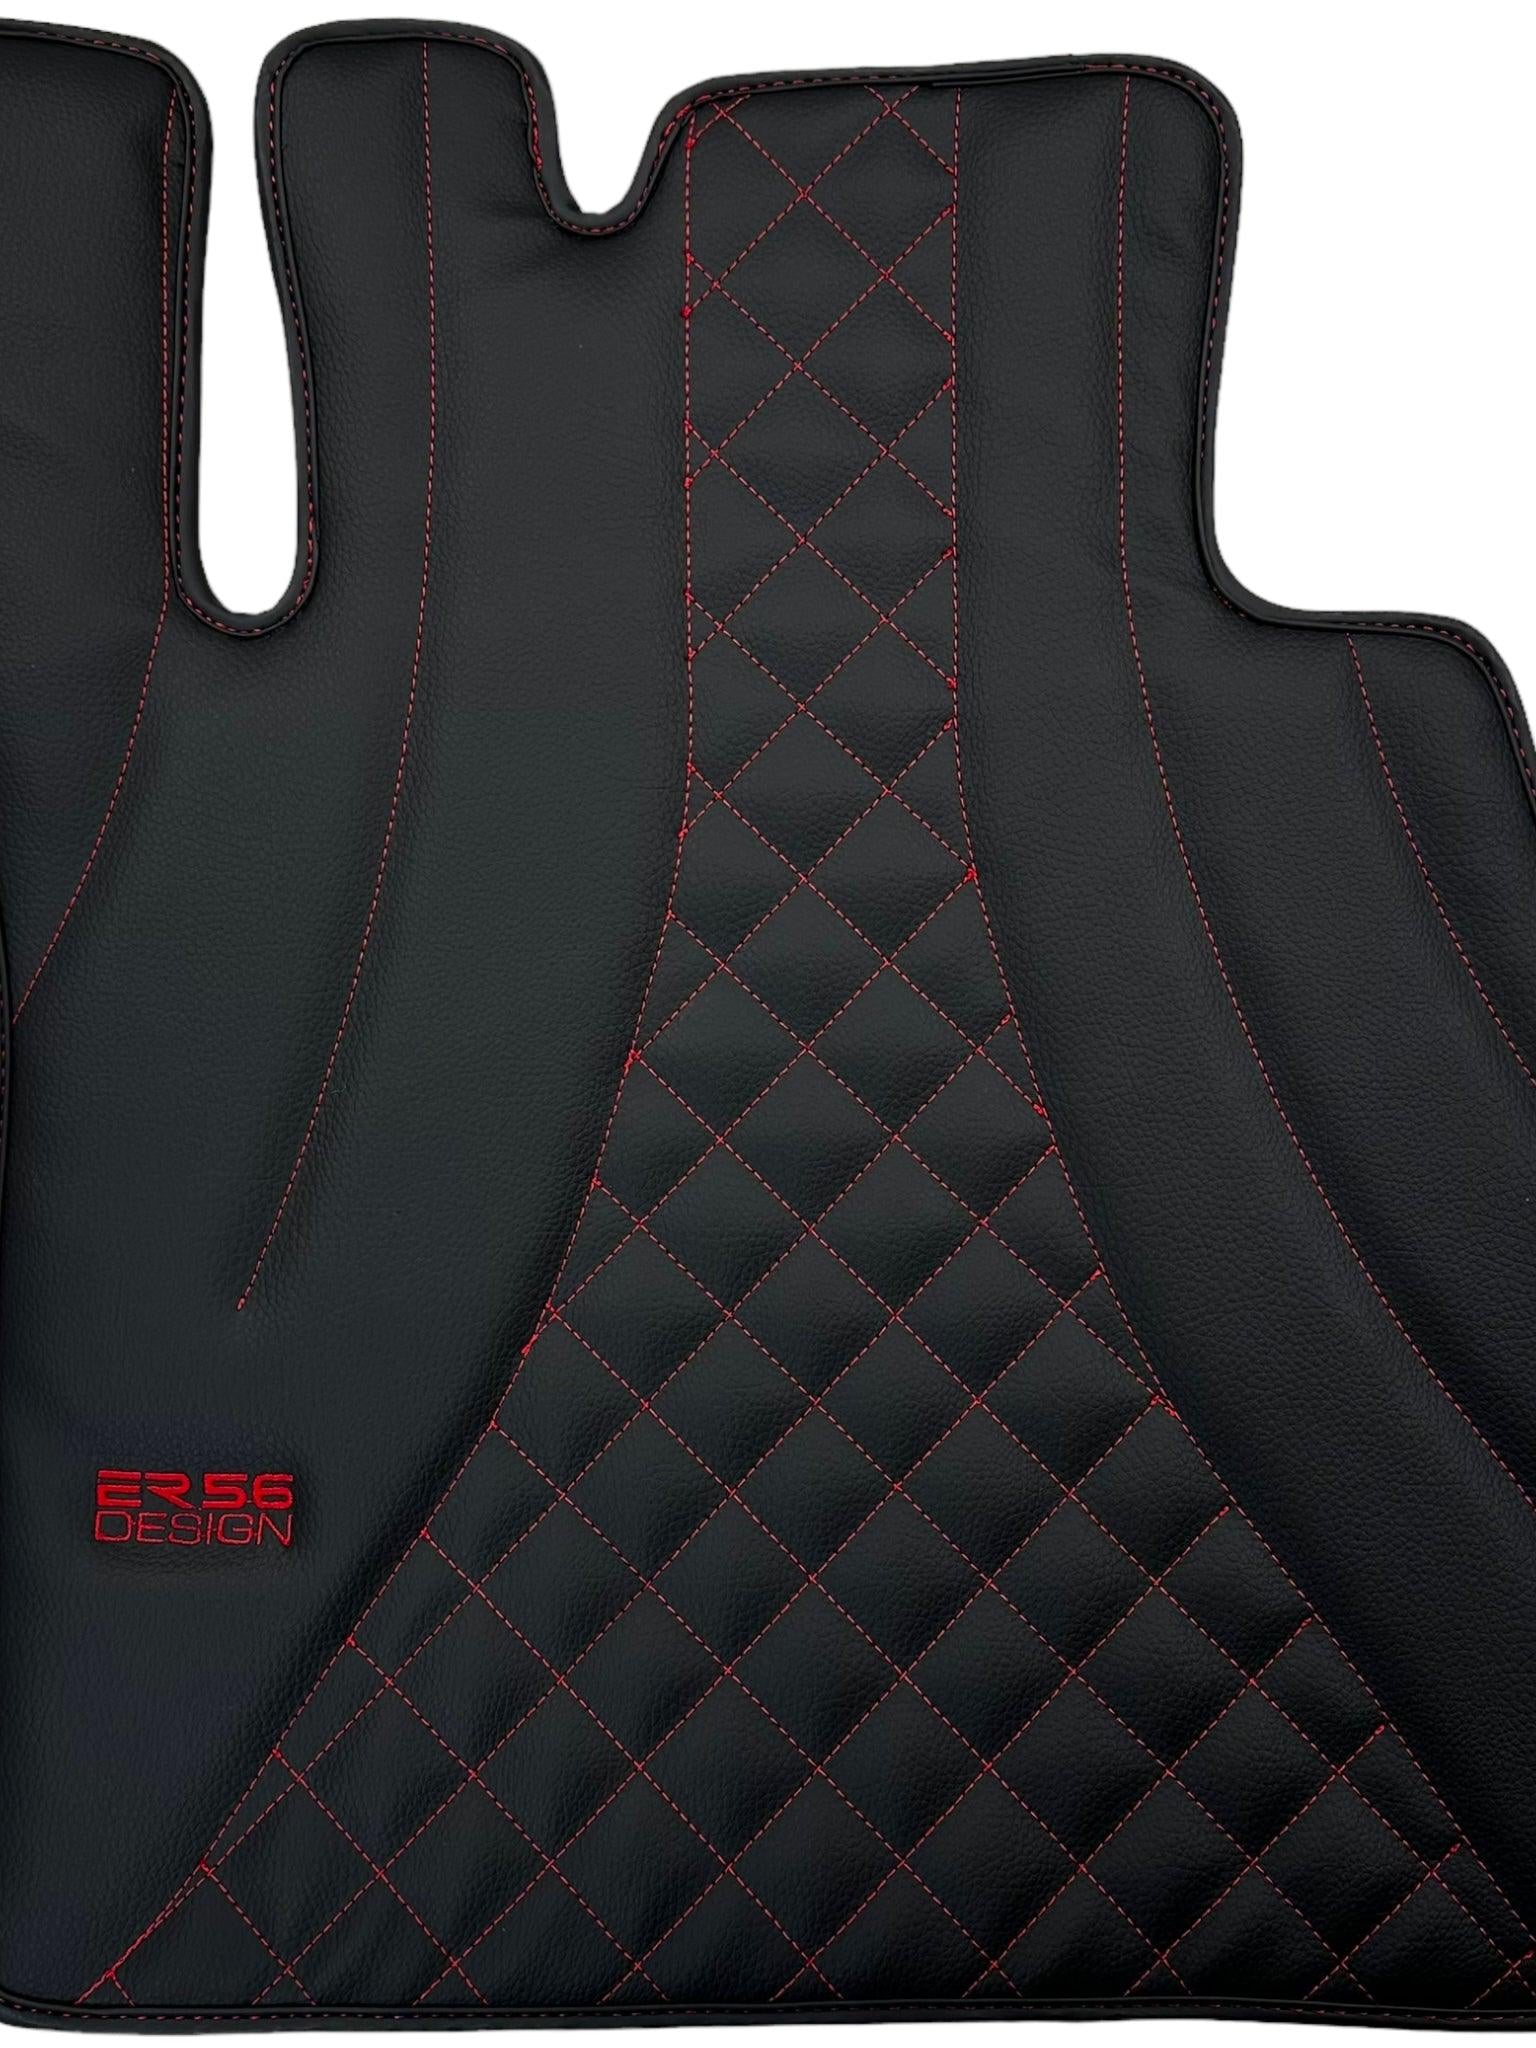 Black Leather Floor Mats for Mercedes-Benz G Class W463 (2008-2018) ER56 Design